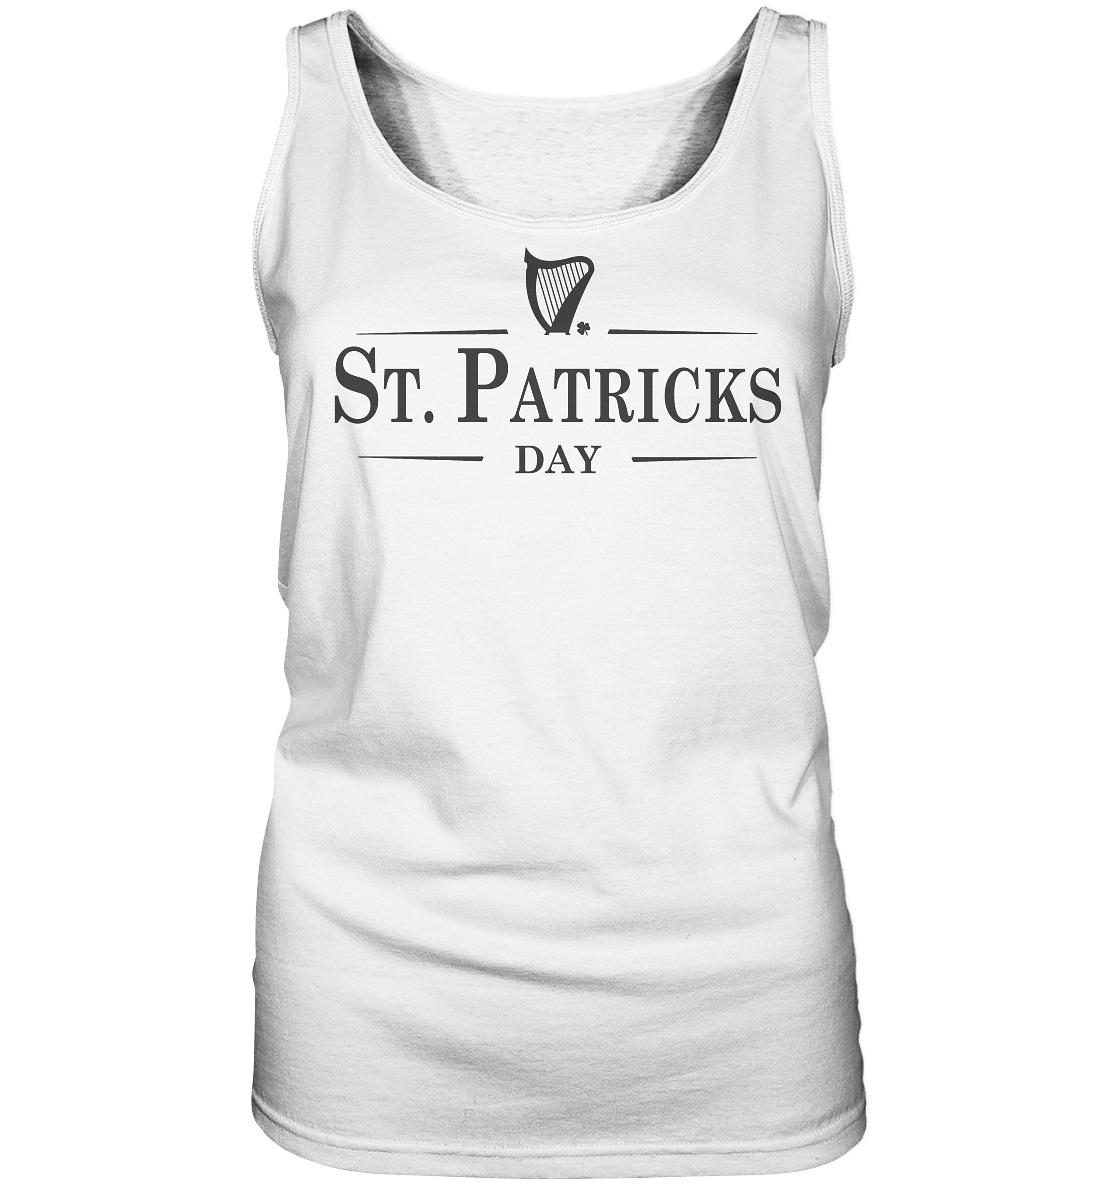 St. Patricks Day "Stout" - Ladies Tank-Top